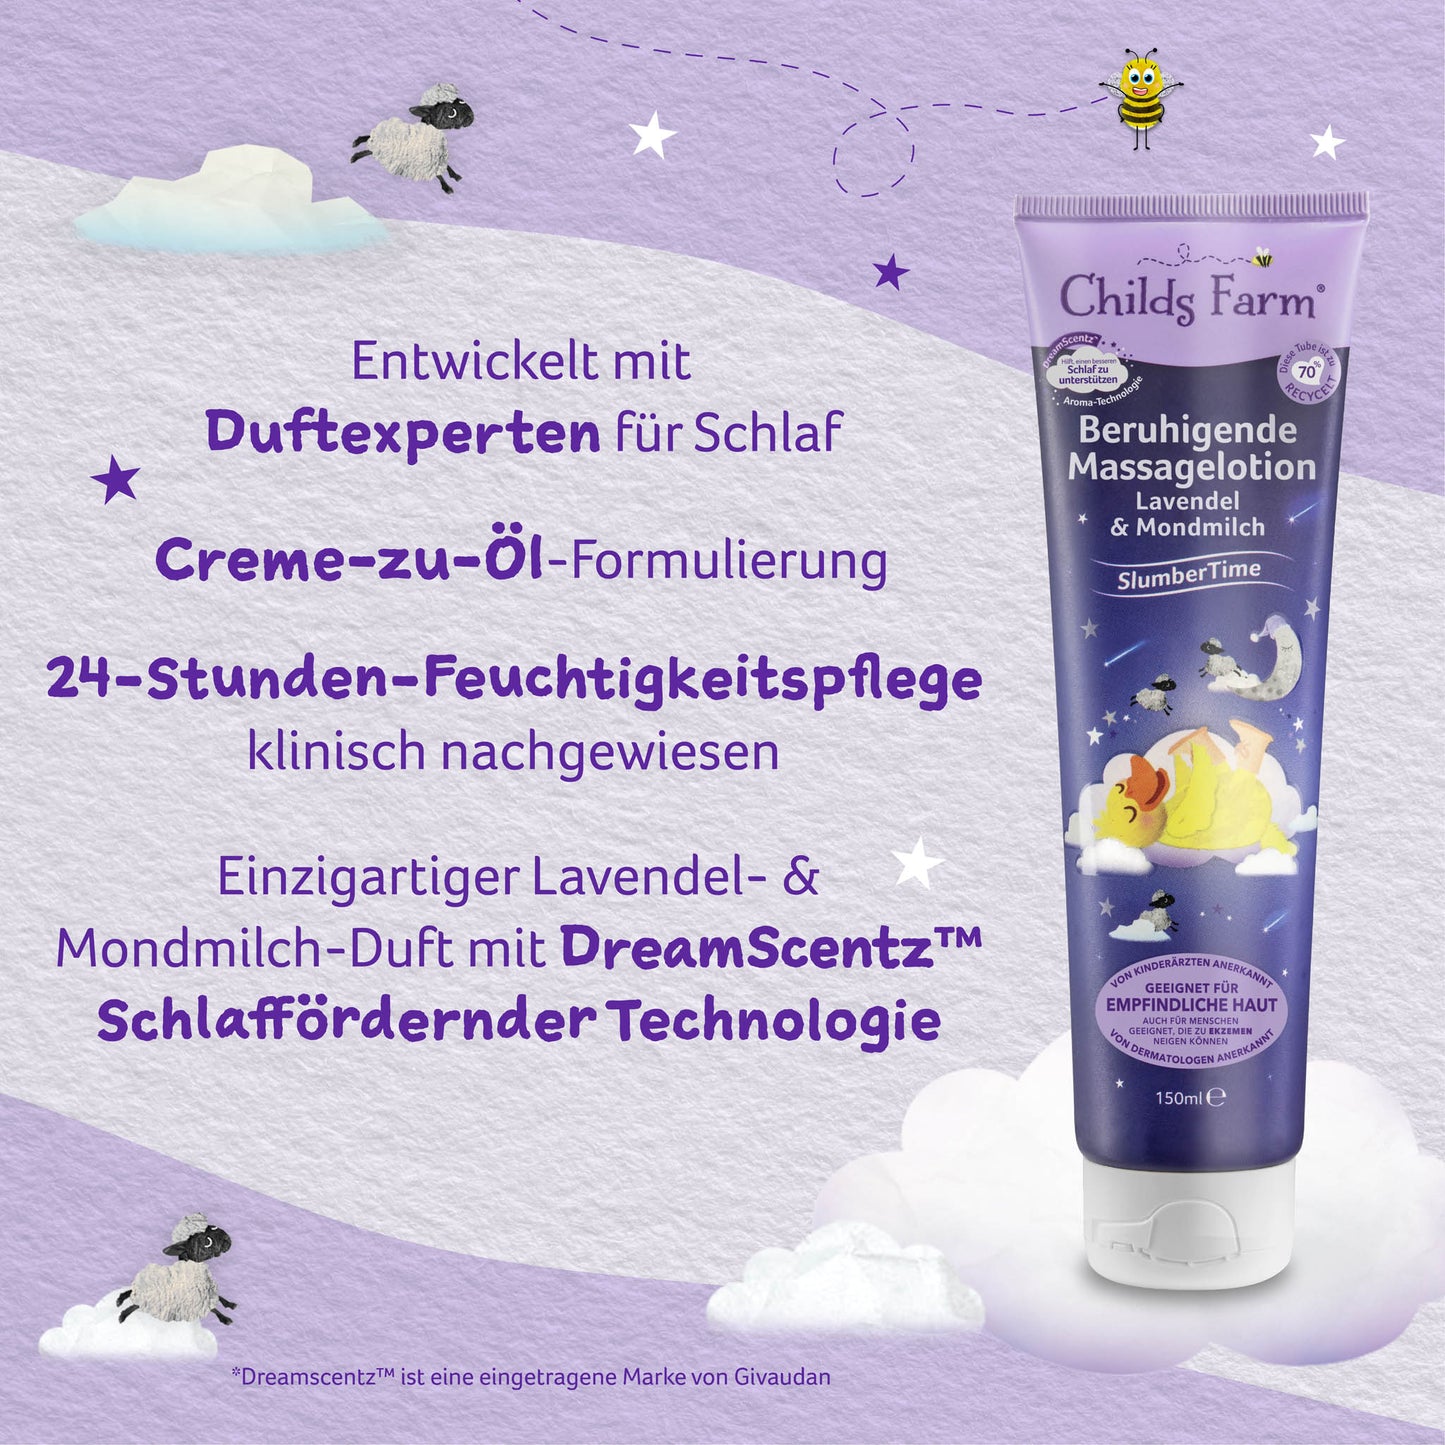 Childs Farm SlumberTime™ calming massage lotion lavender & moon milk